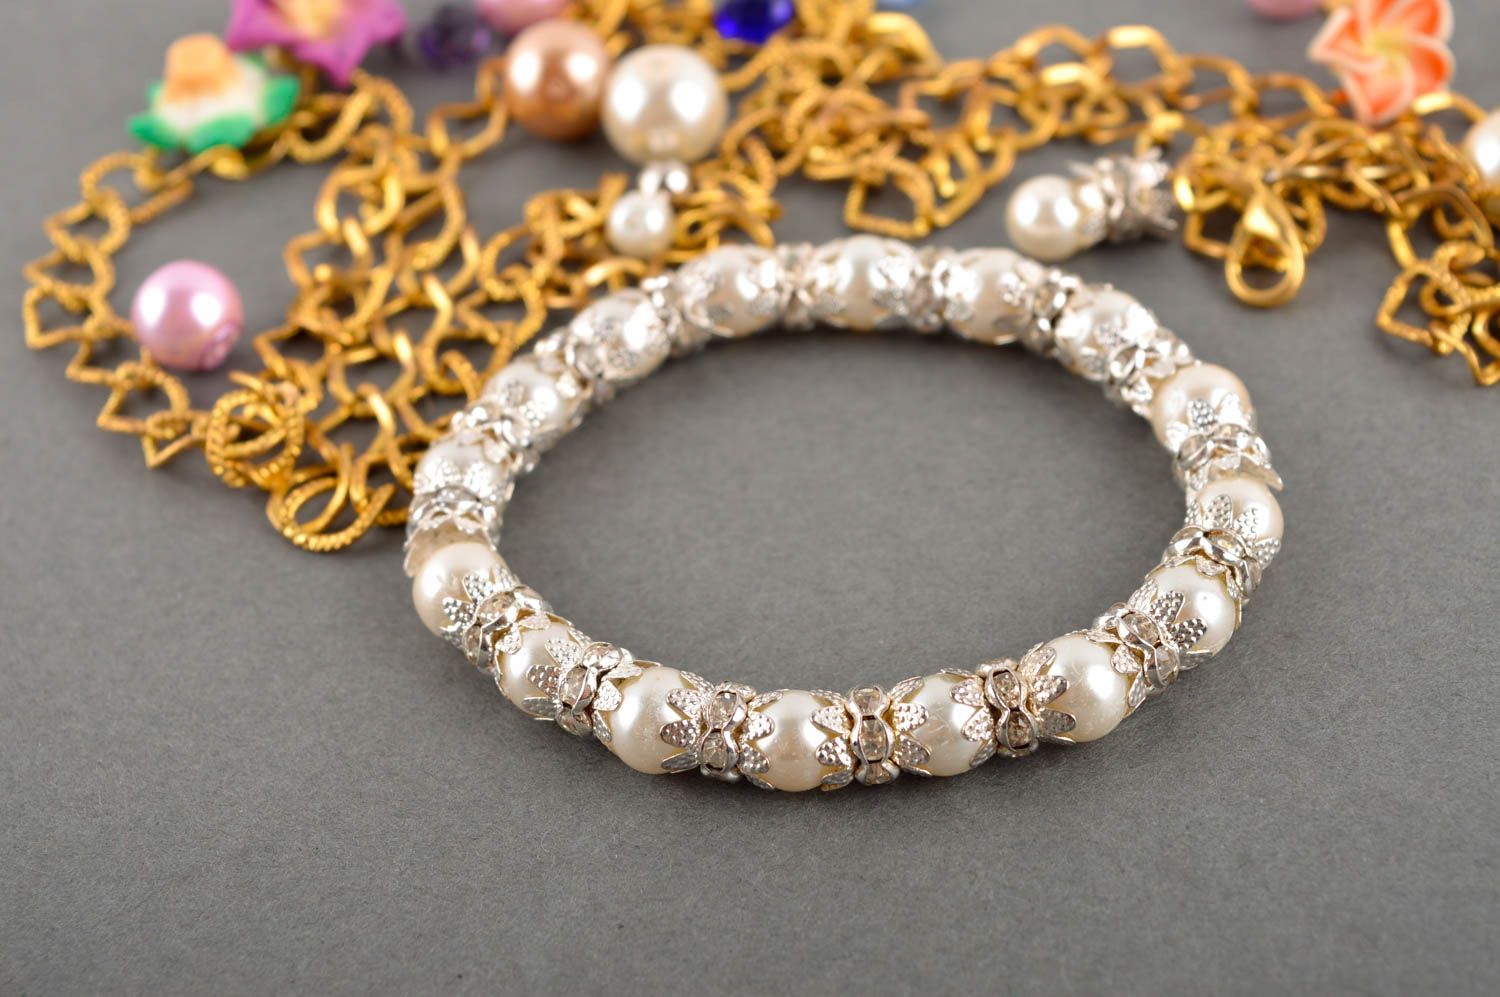 Pearl bracelet handmade jewelry wrist bracelet designer accessories gift for her photo 1